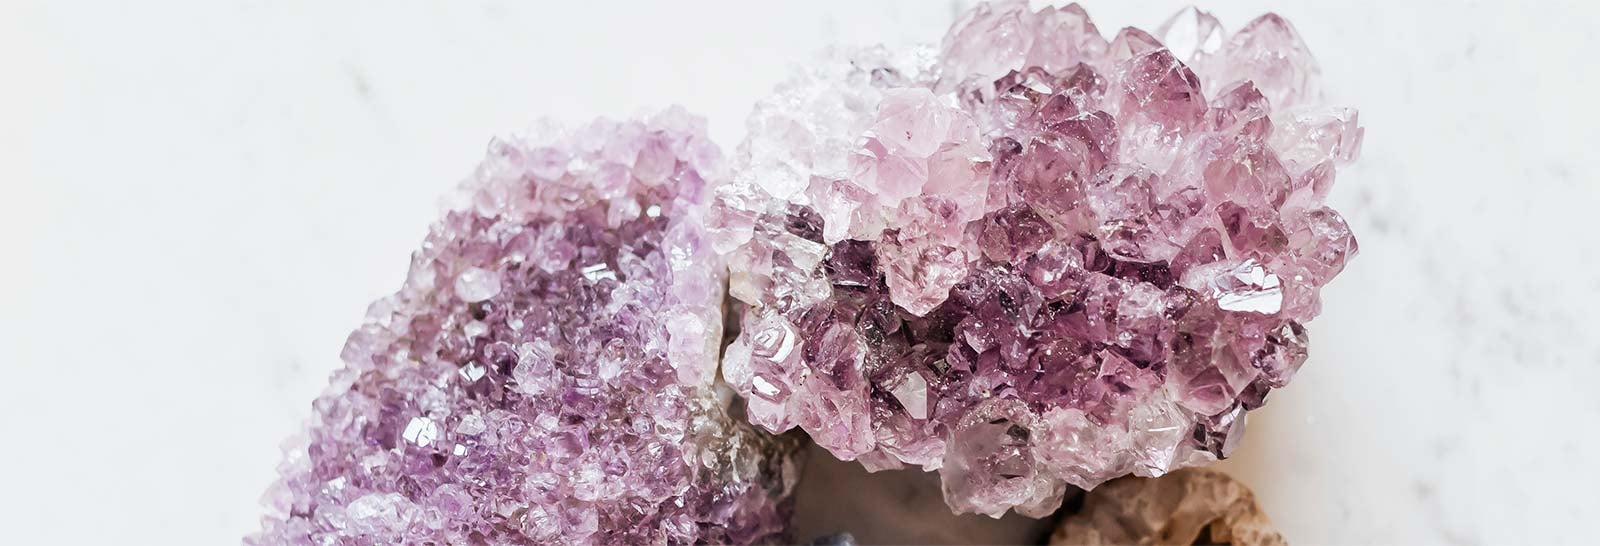 amethyst healing crystals